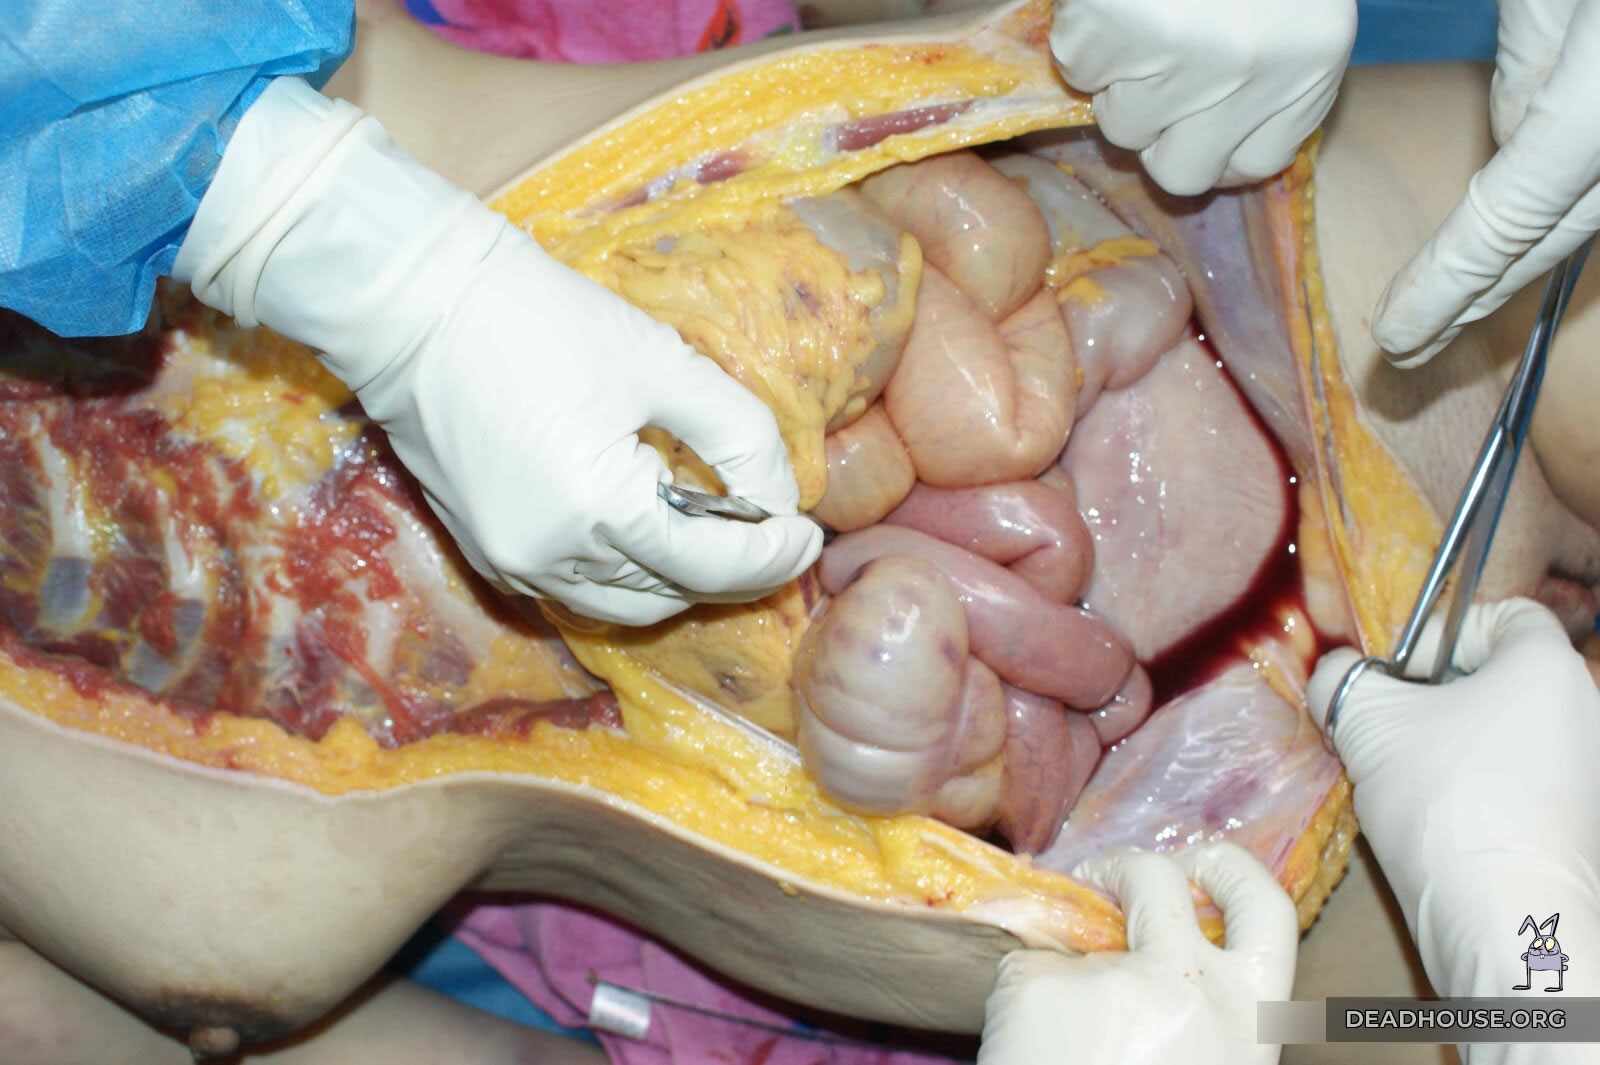 Hemorrhage into the anterior abdominal wall